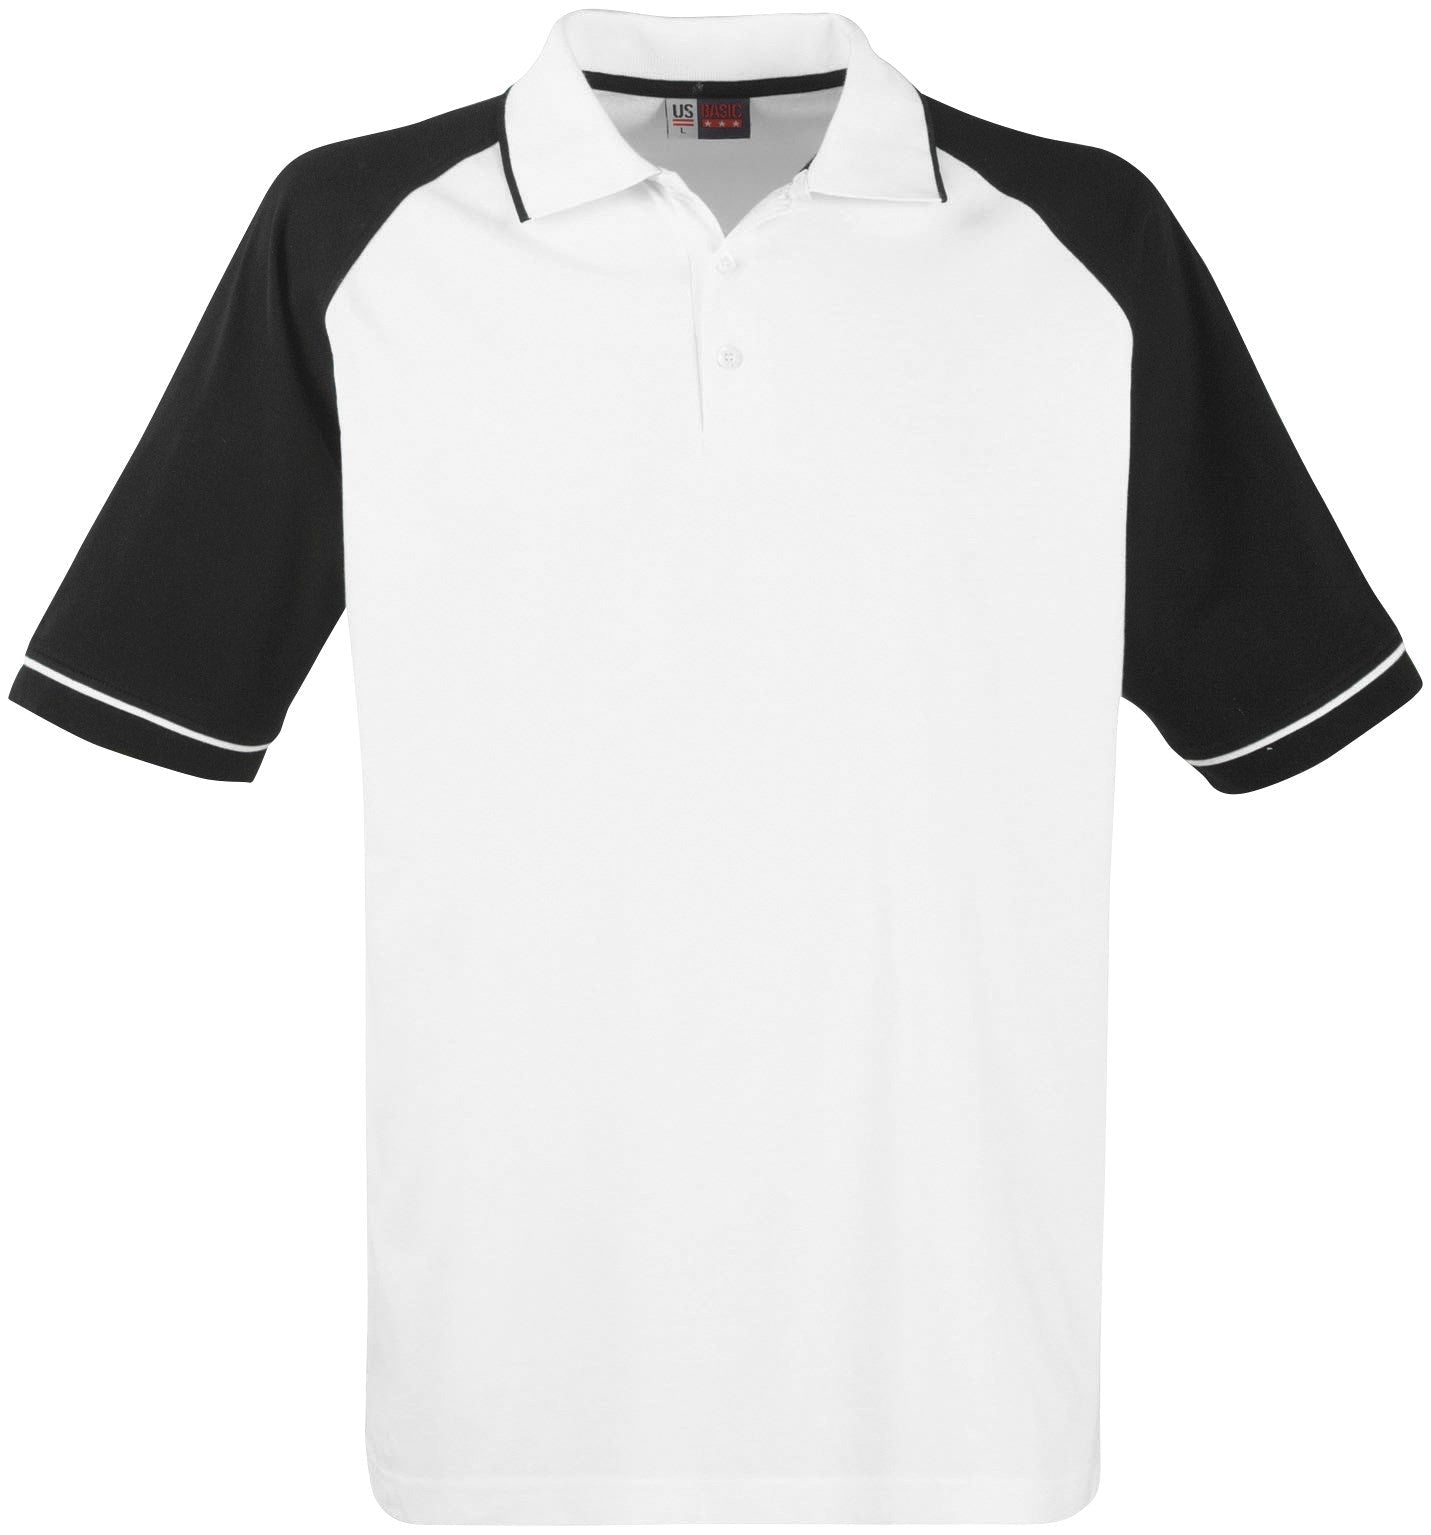 Mens Sydney Golf Shirt - Black Only-2XL-Black-BL